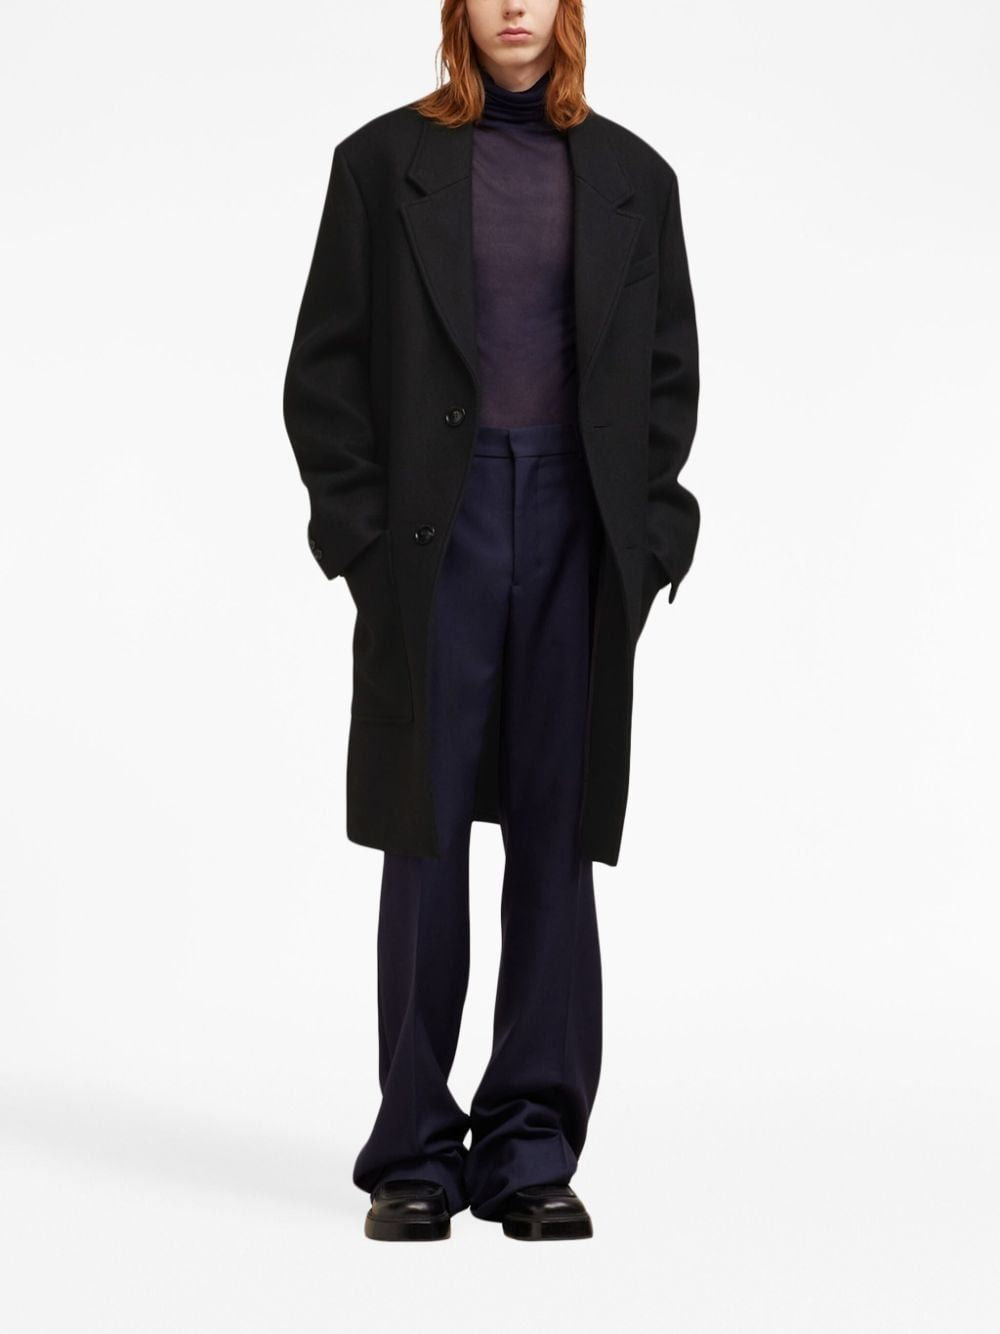 AMI PARIS FW23 Men's 100% Virgin Wool Coat - Classic and Sophisticated